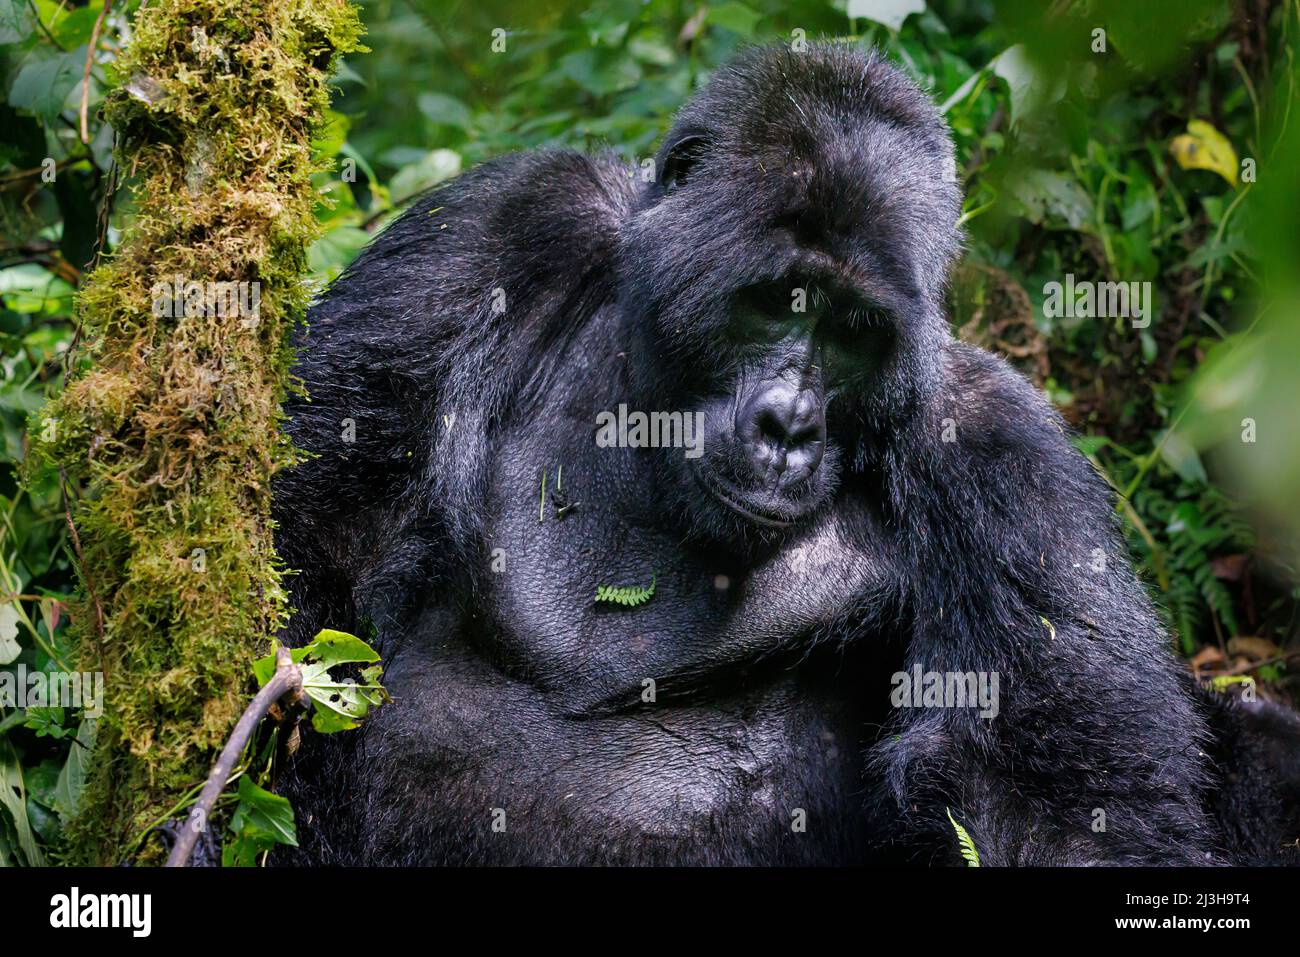 Uganda, Kanungu district, Ruhija, Bwindi impenetrable national Park listed as World Heritage by UNESCO, mountain silverback gorilla Stock Photo